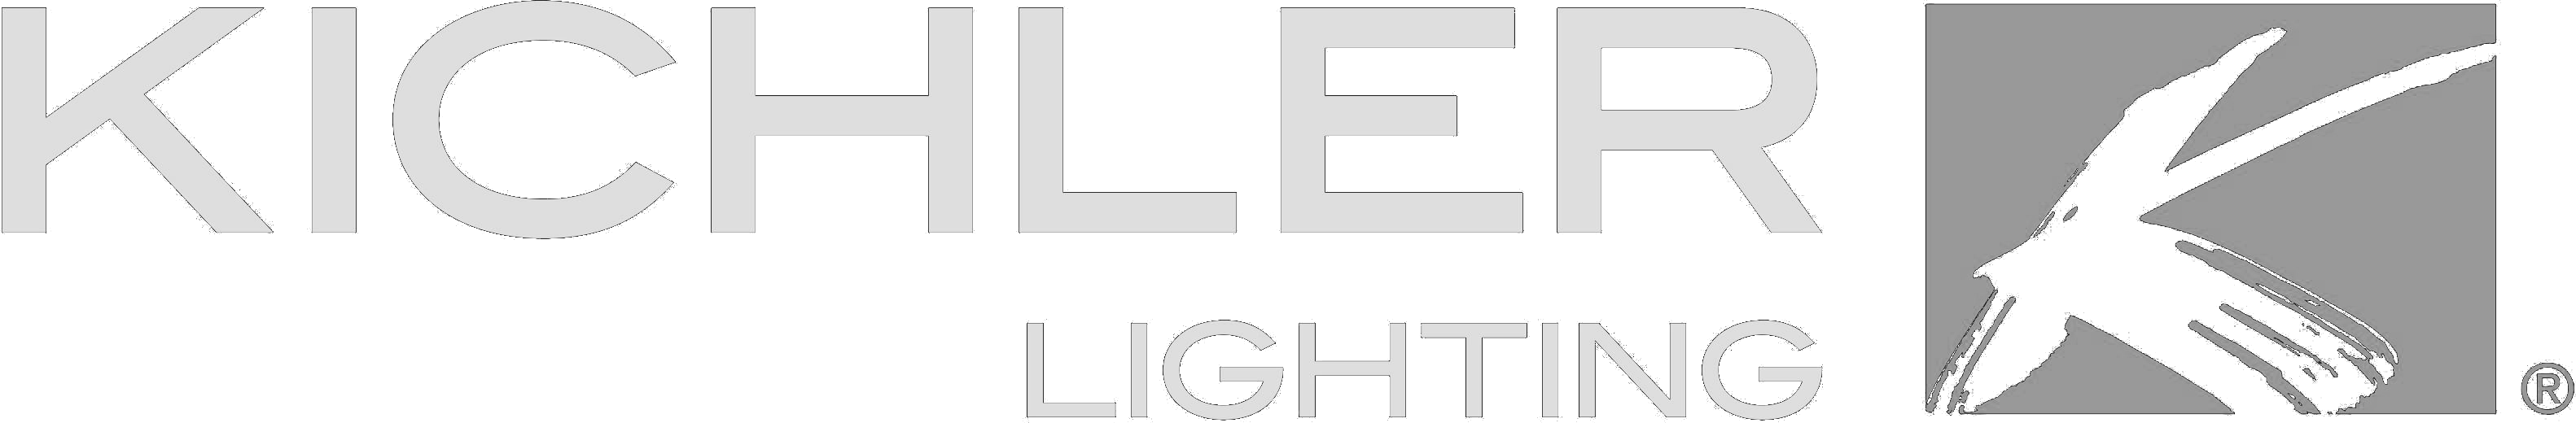 kichler-lighting-logo-inverse